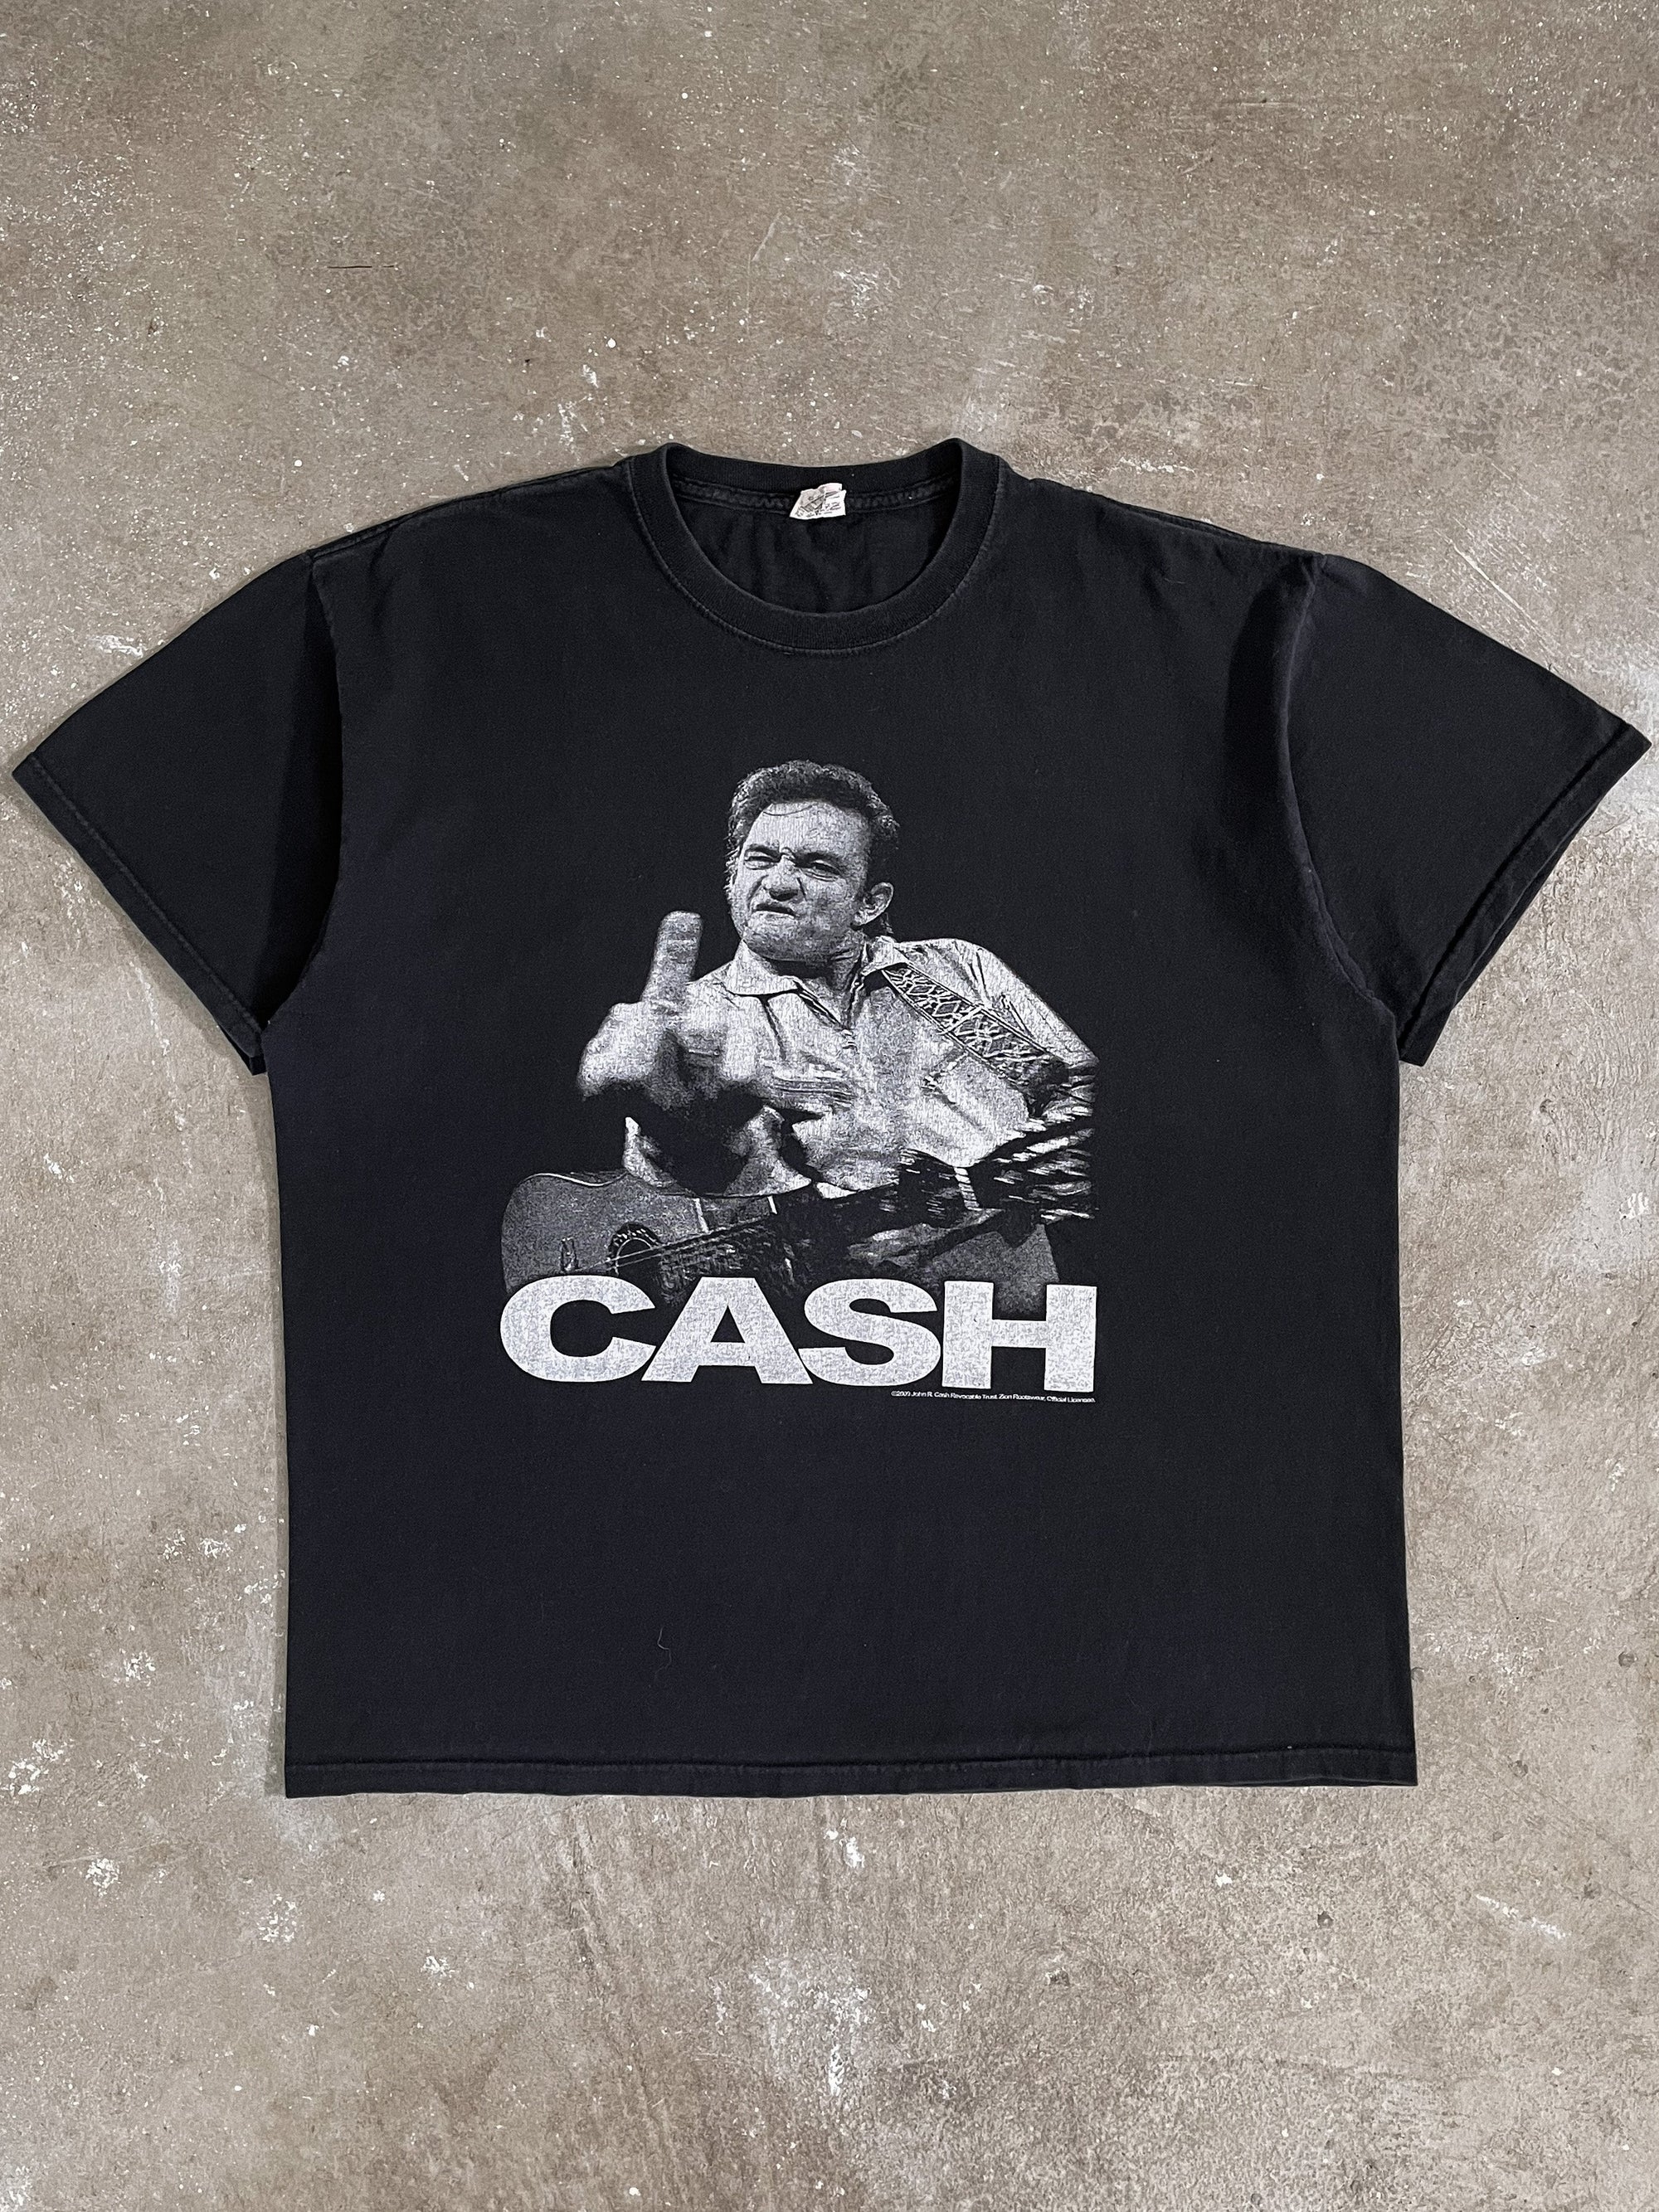 2000s “Johnny Cash” Tee (XL)